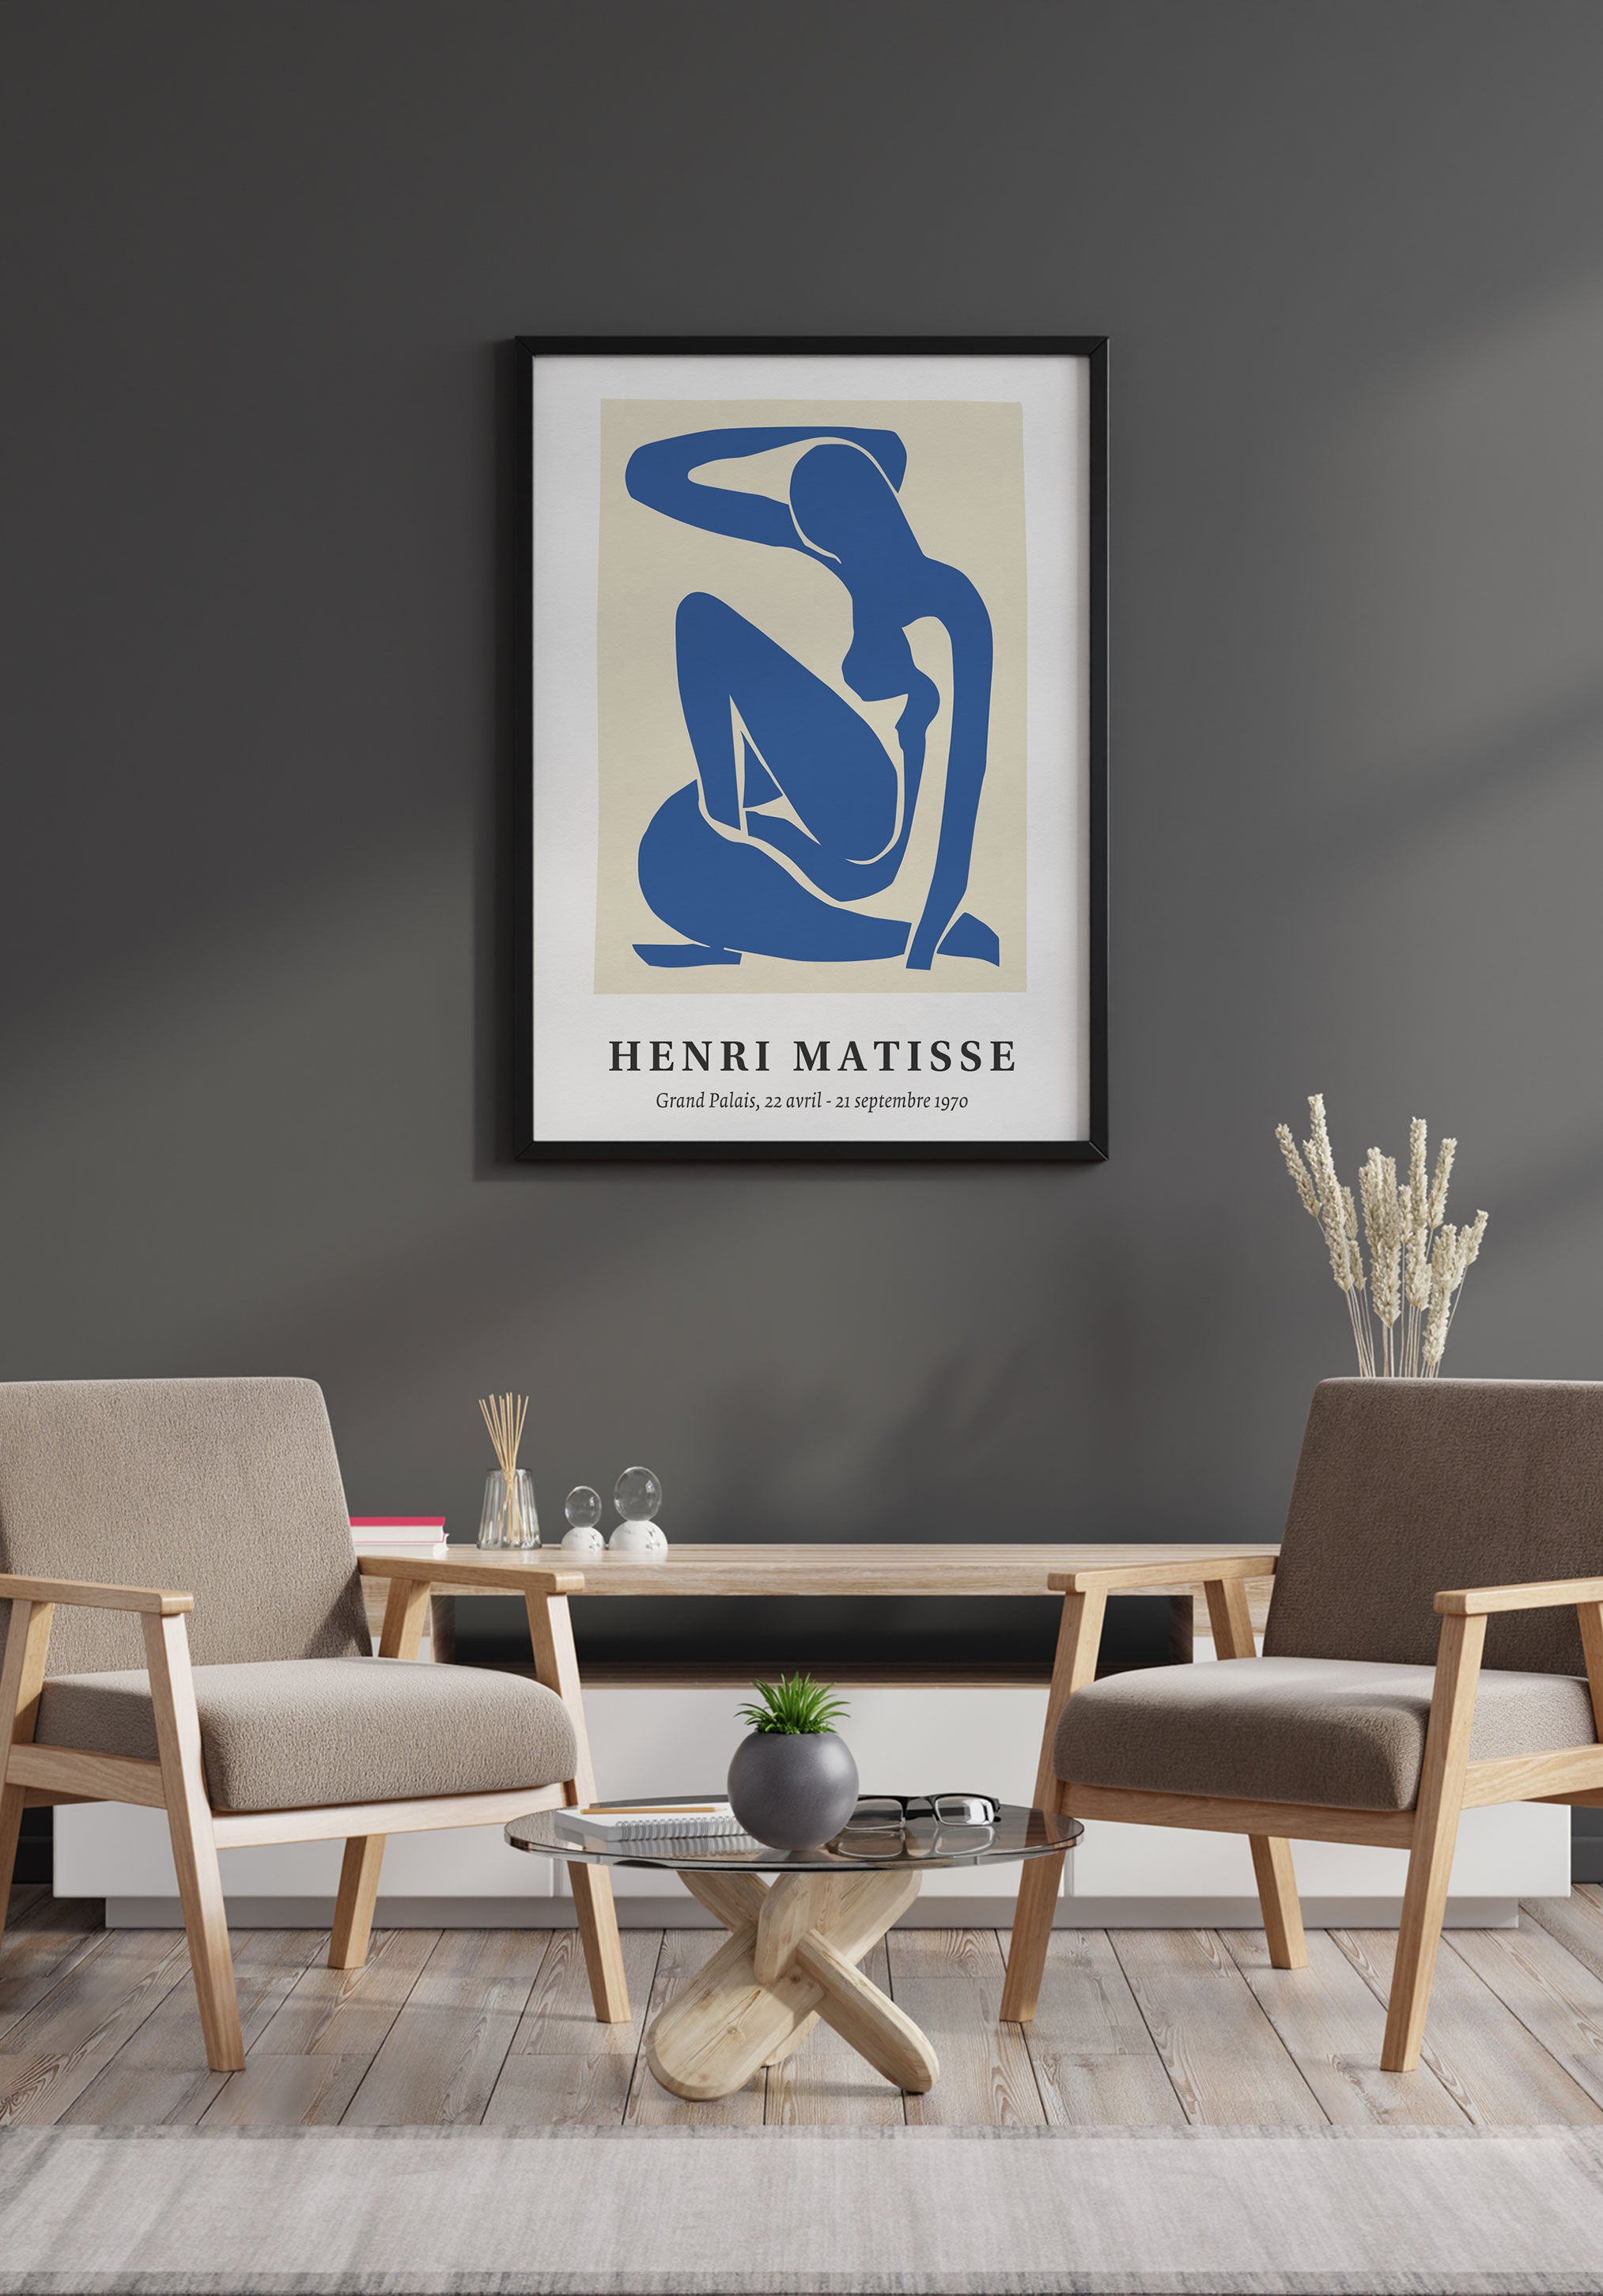 Henri Matisse Cut-Out Exhibition Poster